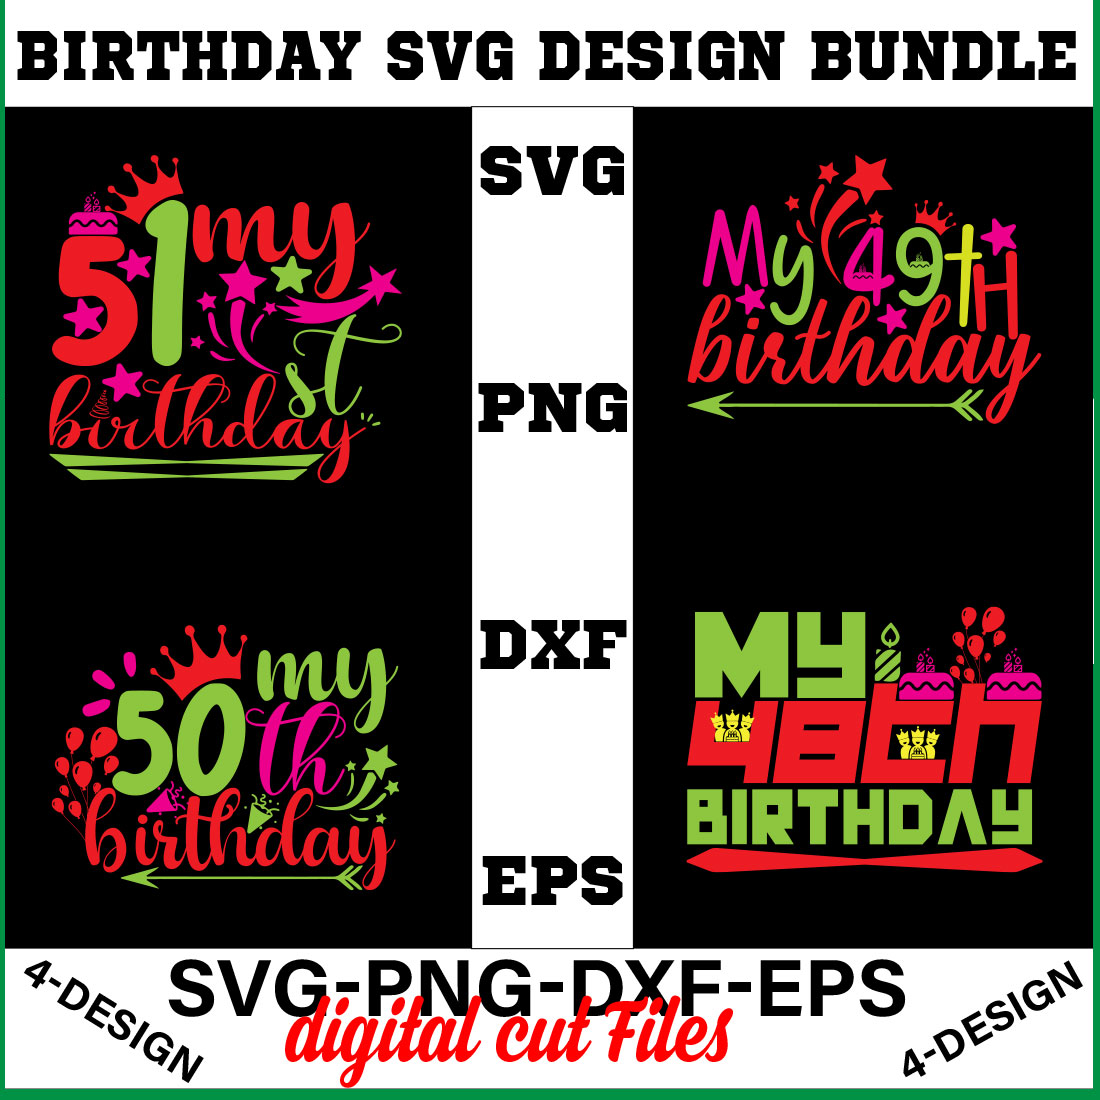 birthday svg design bundle Happy birthday svg bundle hand lettered birthday svg birthday party svg Volume-13 cover image.